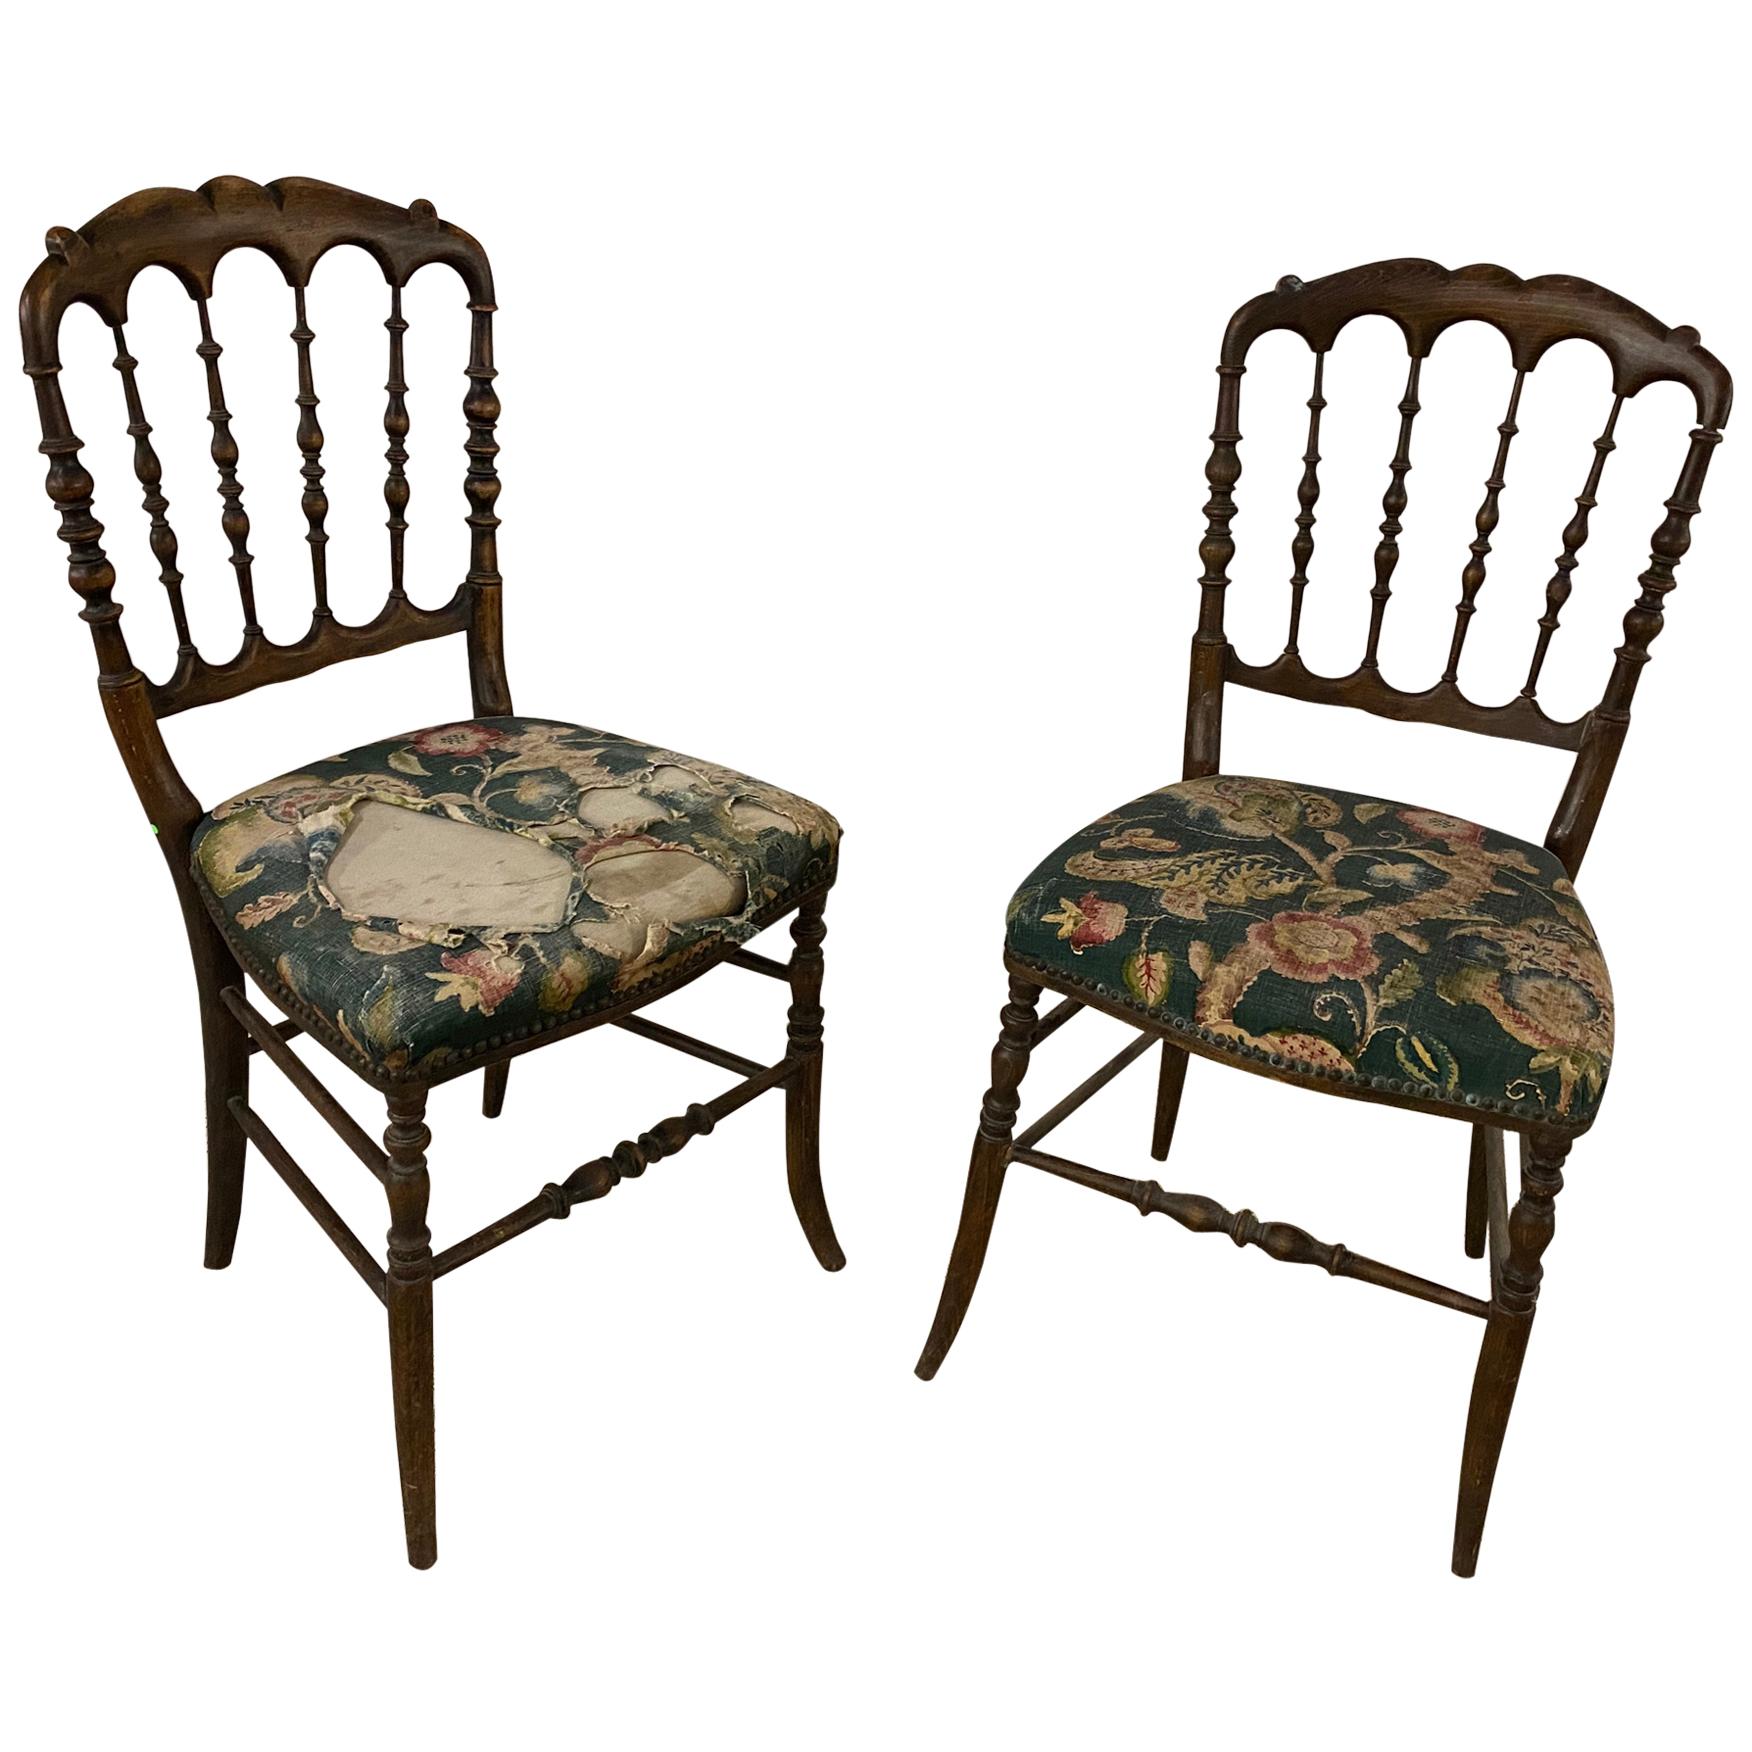 2 Original Chiarivari Napoleon III Ebonized Chairs, France, 1850s